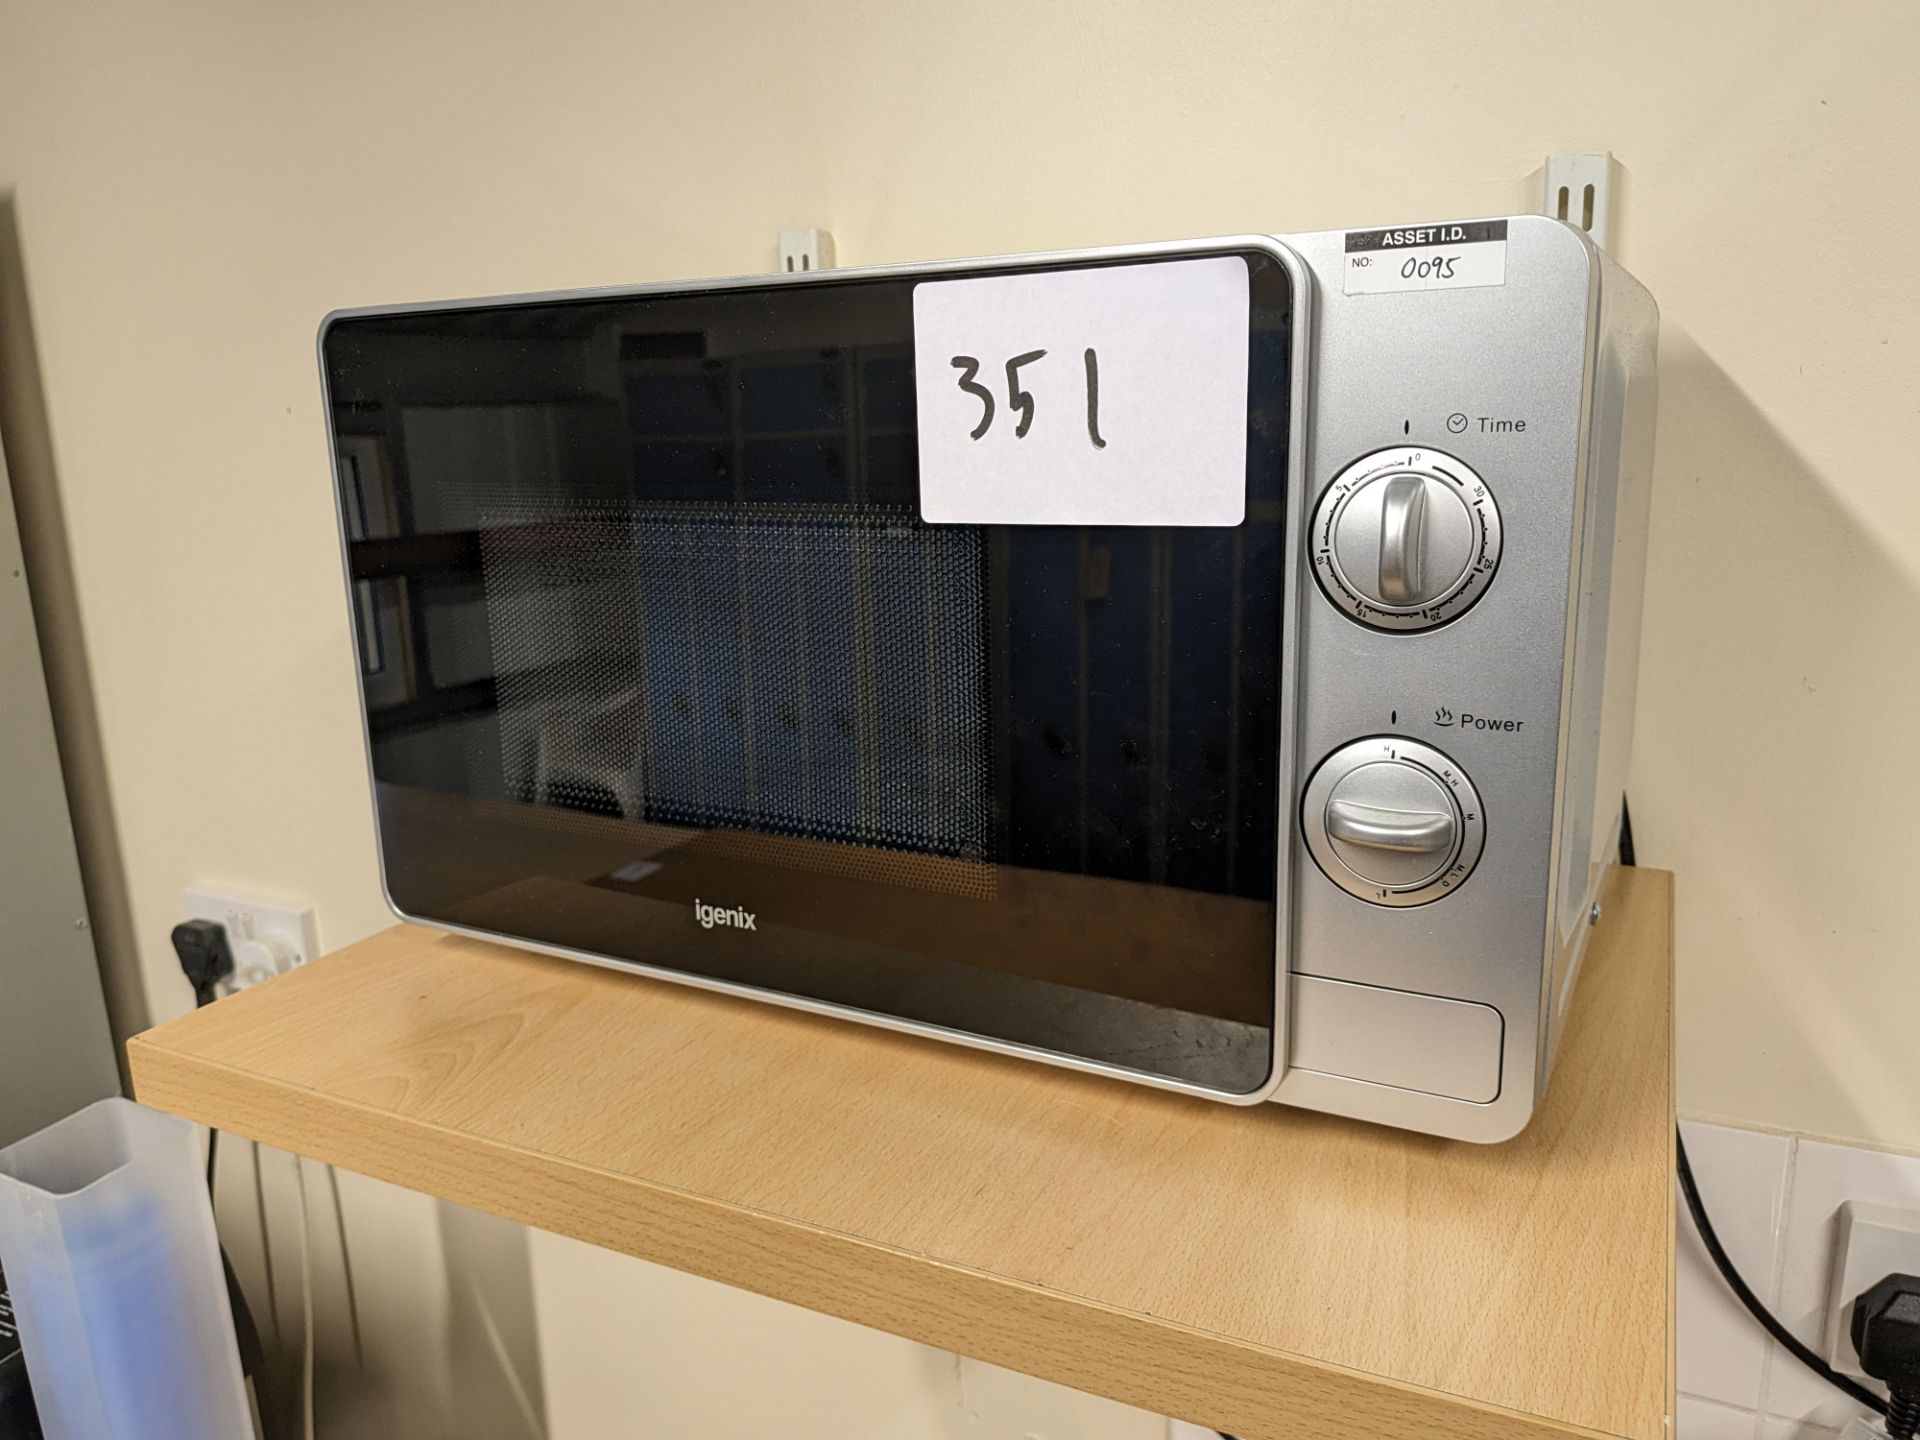 1: Igenix Microwave oven